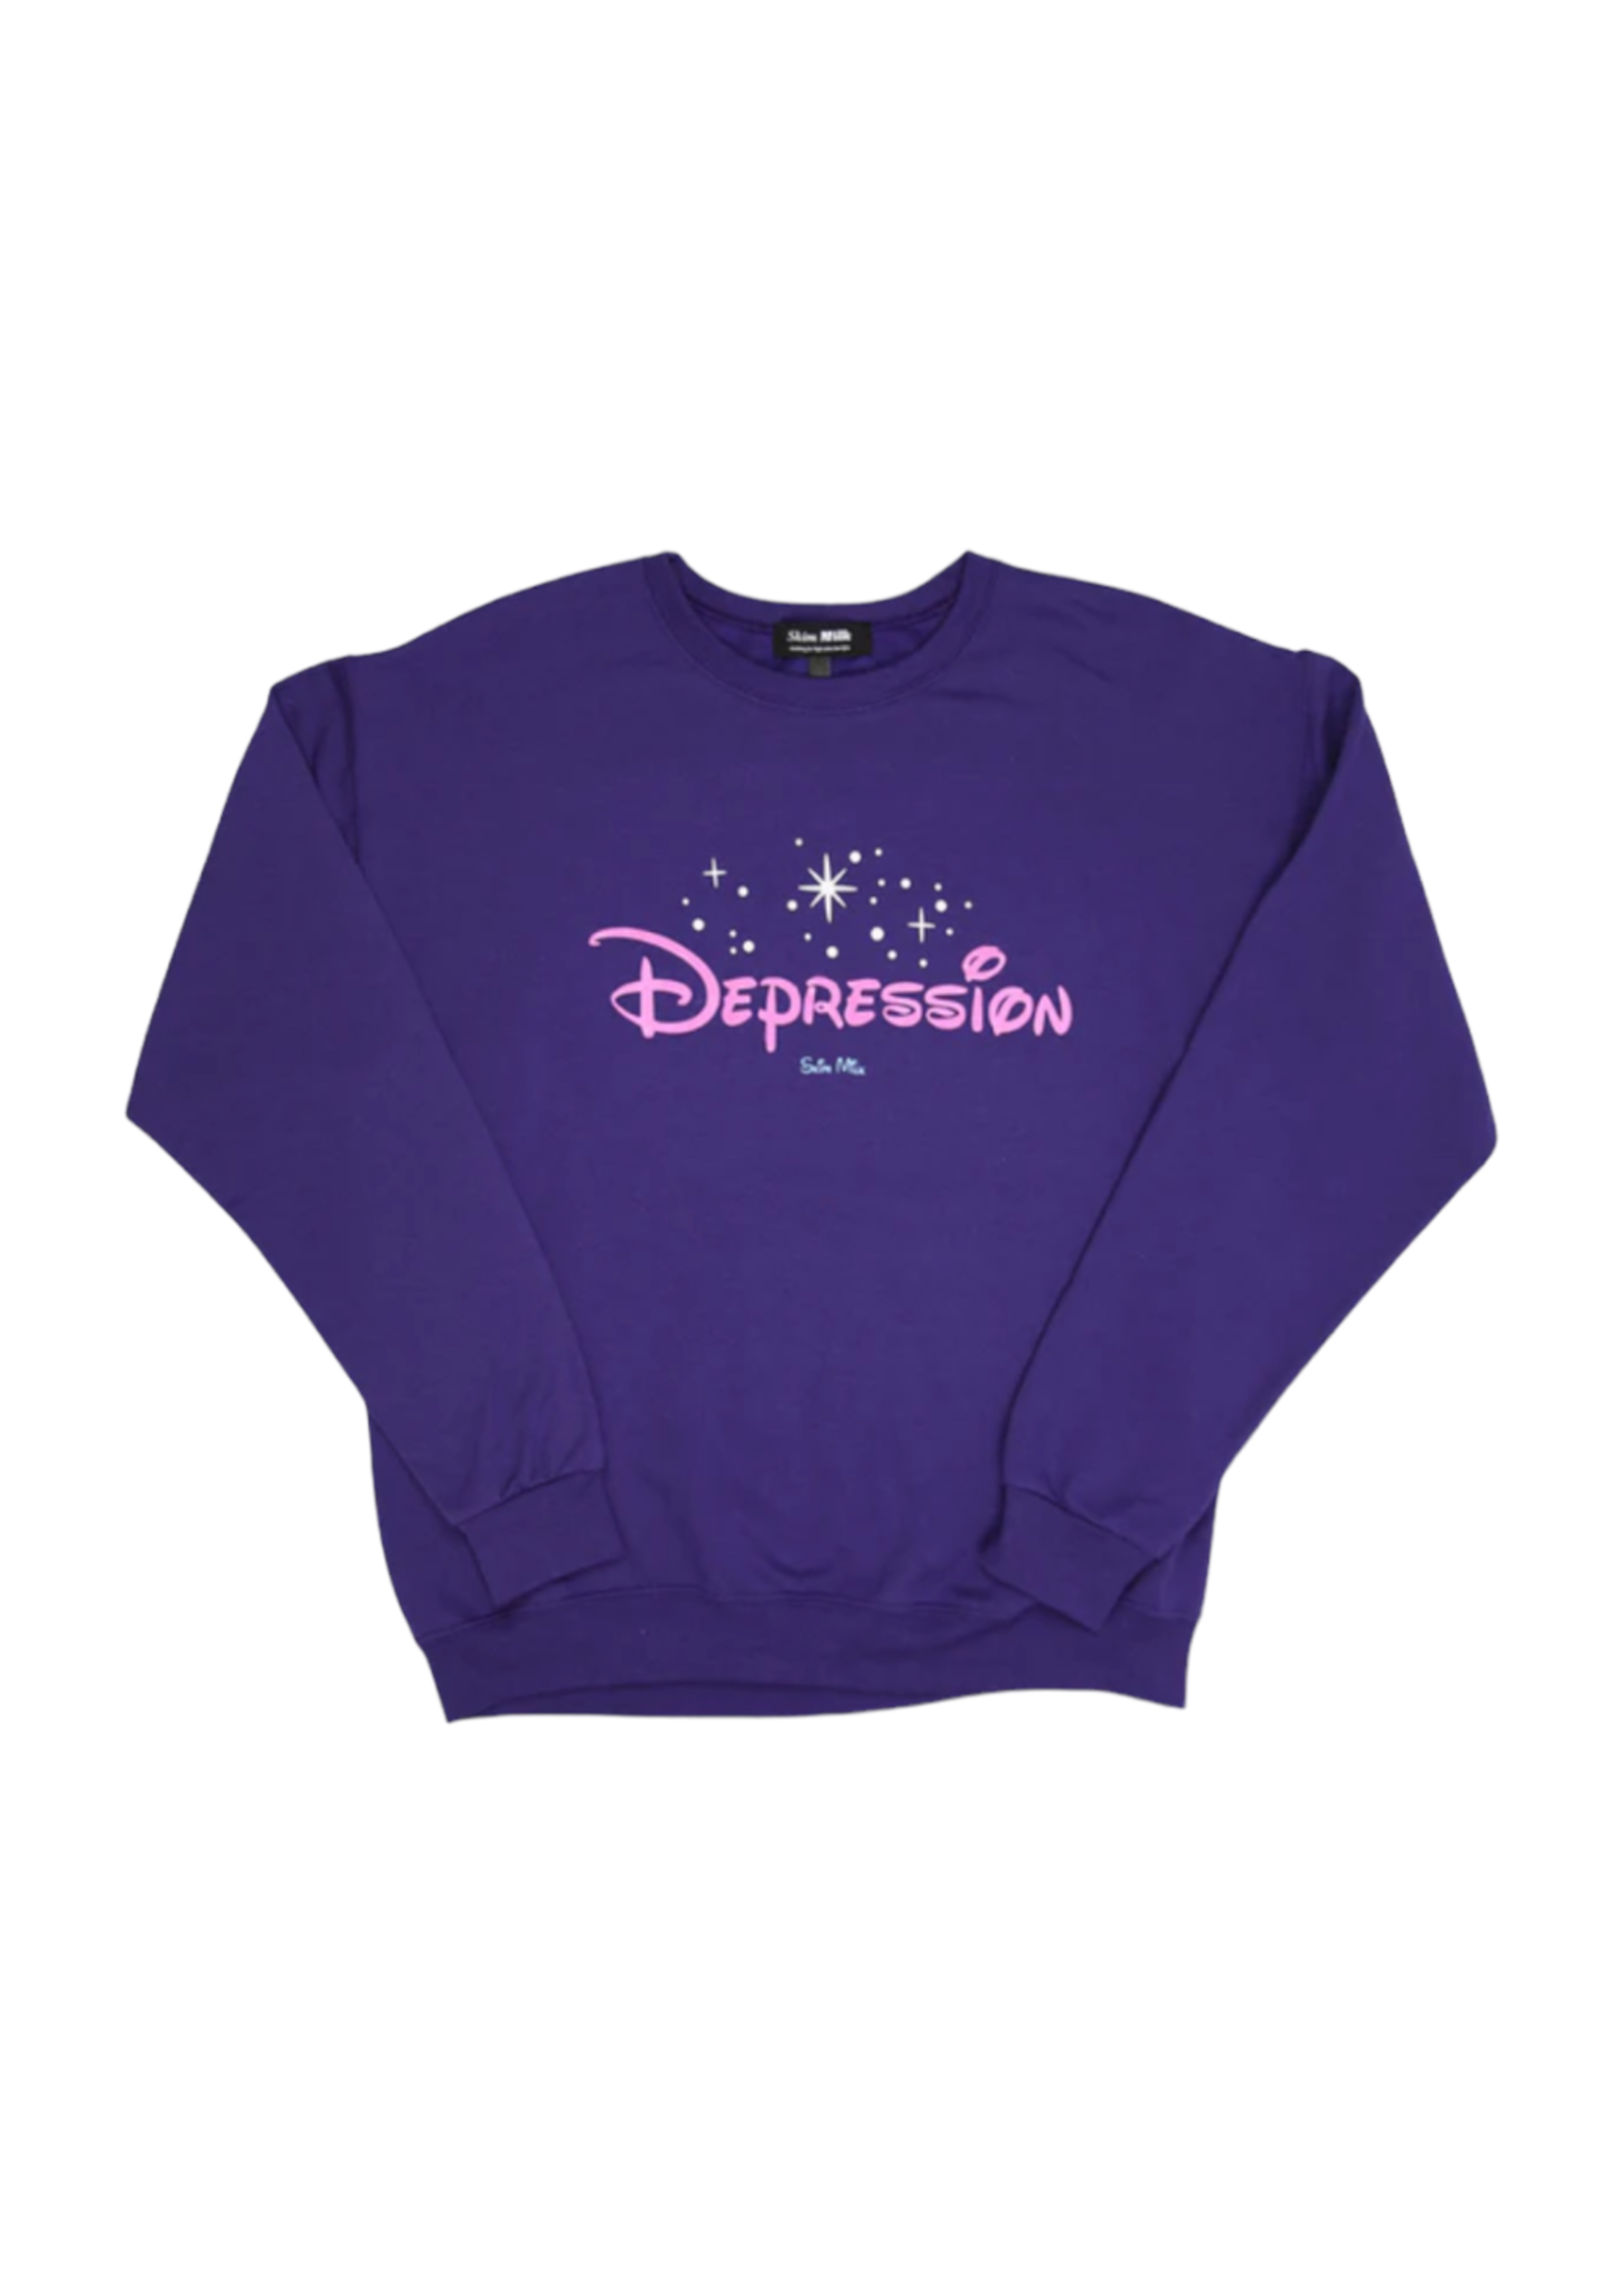 Skim Milk Skim Milk Depression Sweatshirt Purple